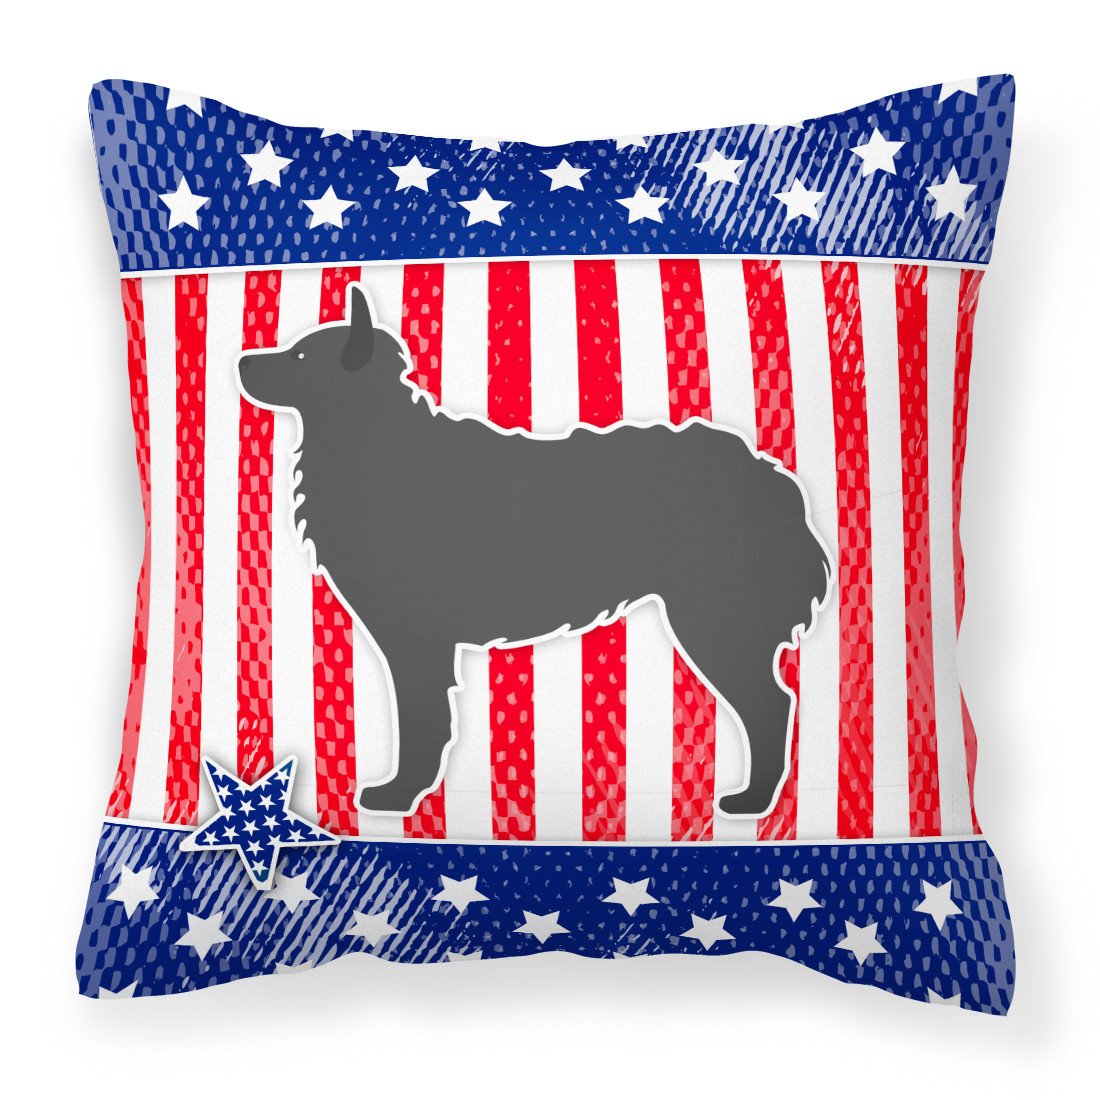 USA Patriotic Croatian Sheepdog Fabric Decorative Pillow BB3321PW1818 by Caroline's Treasures